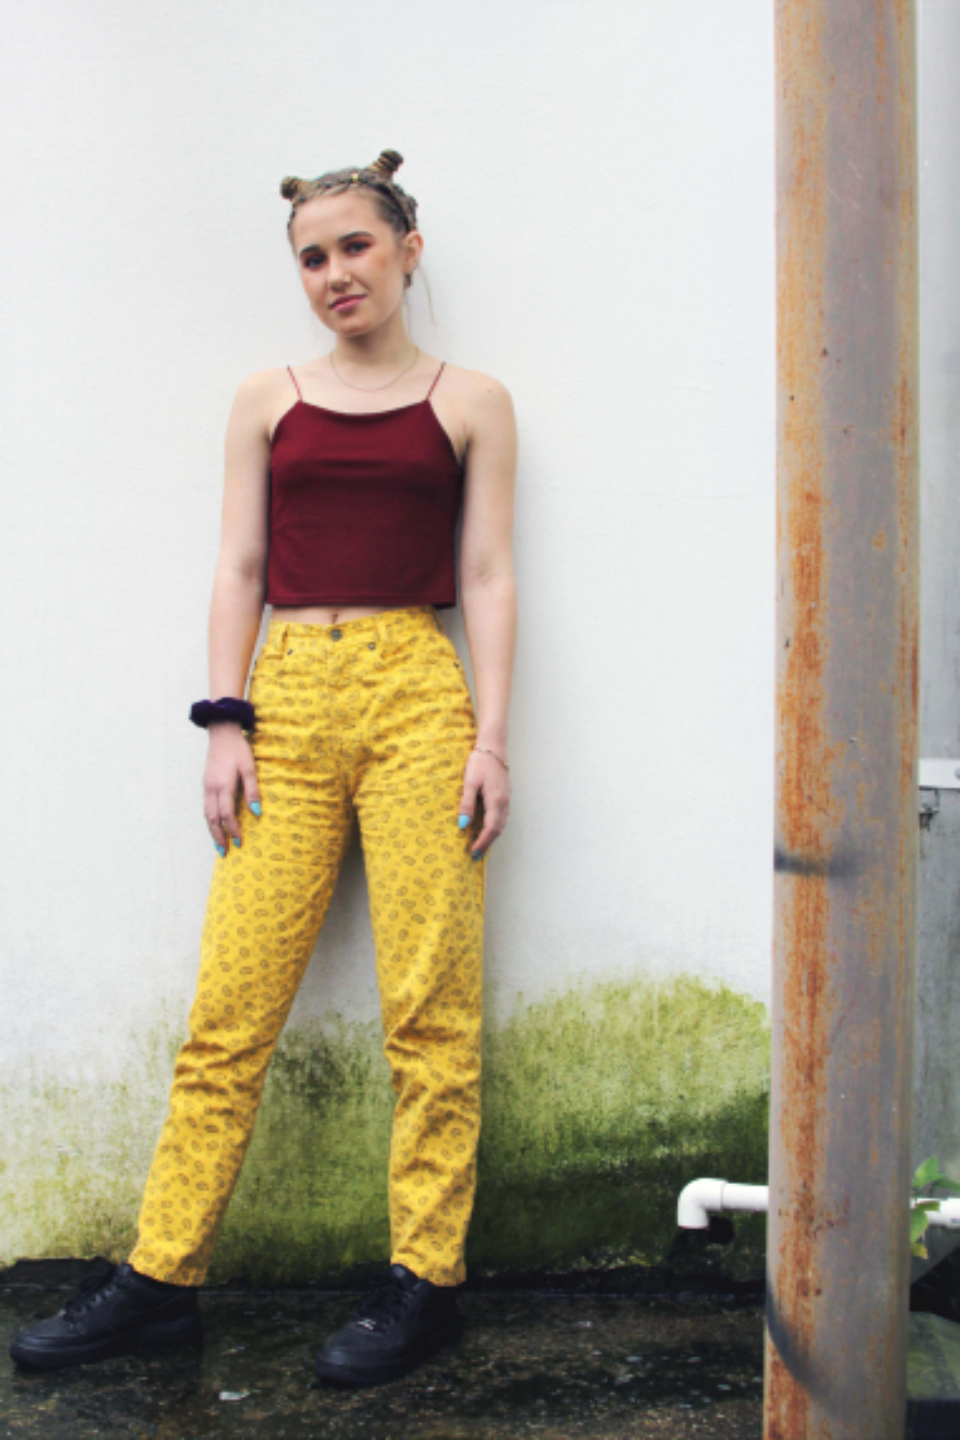 teenager fashion girl hip hipster pose clothes style outdoors urban model quirky hair person teen yellow pants female 女 短裤 黄色 少年 人 头发 怪诞 模型 城市 户外 风格 衣装 摆姿 潮人 髋 女孩 时尚 少年